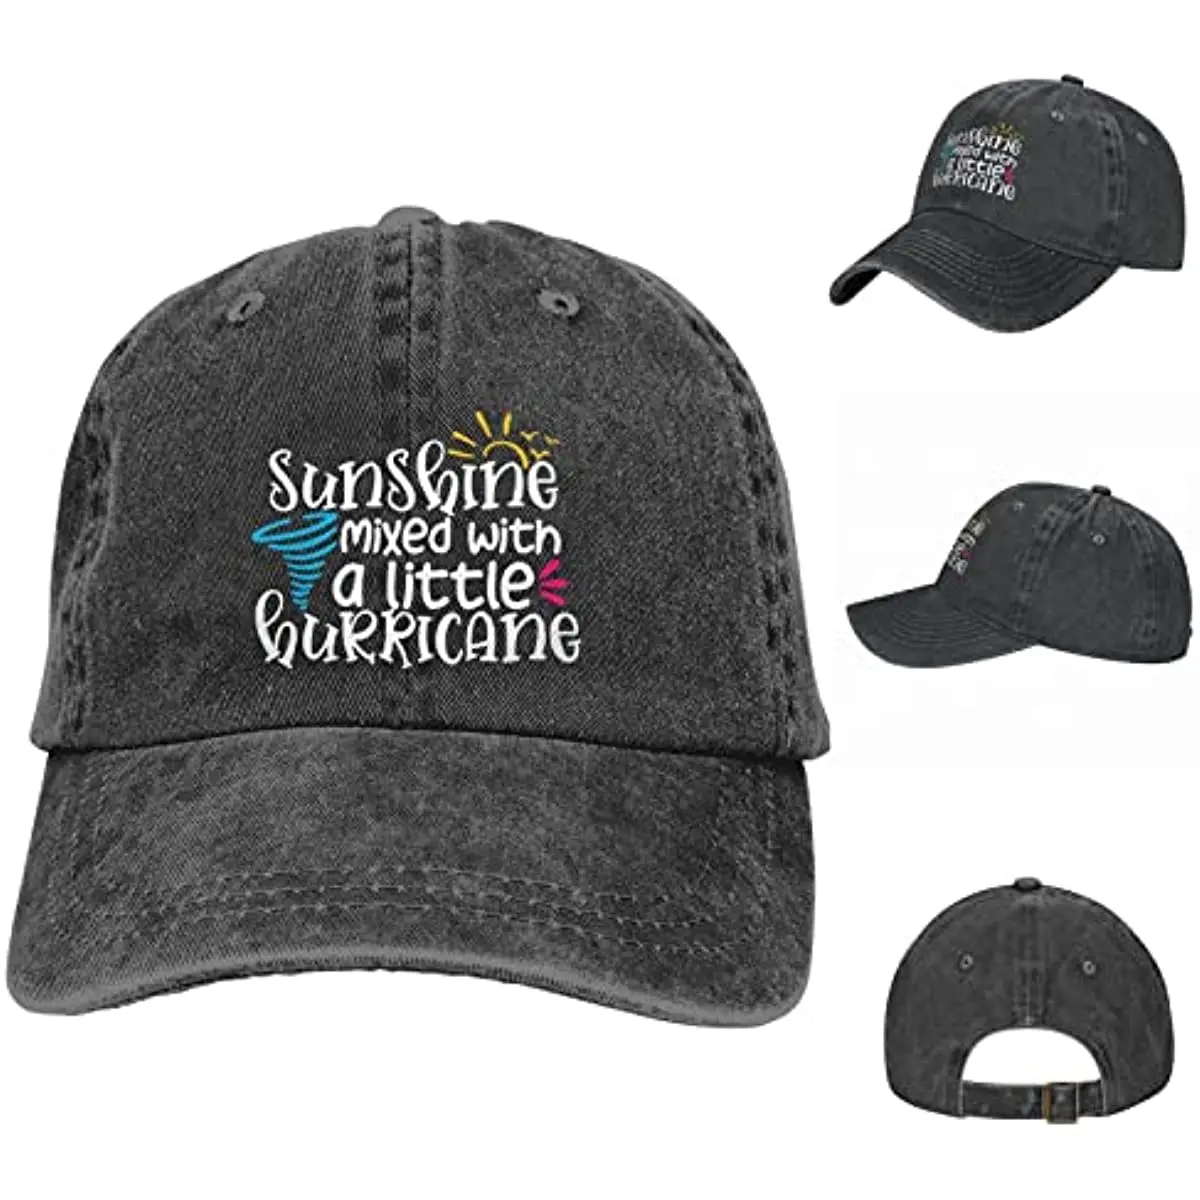 

Baseball Cap Cowboy Hat Adjustable Vintage Funny Caps for Women Men Outdoor Sport Trucker Hats Four Seasons